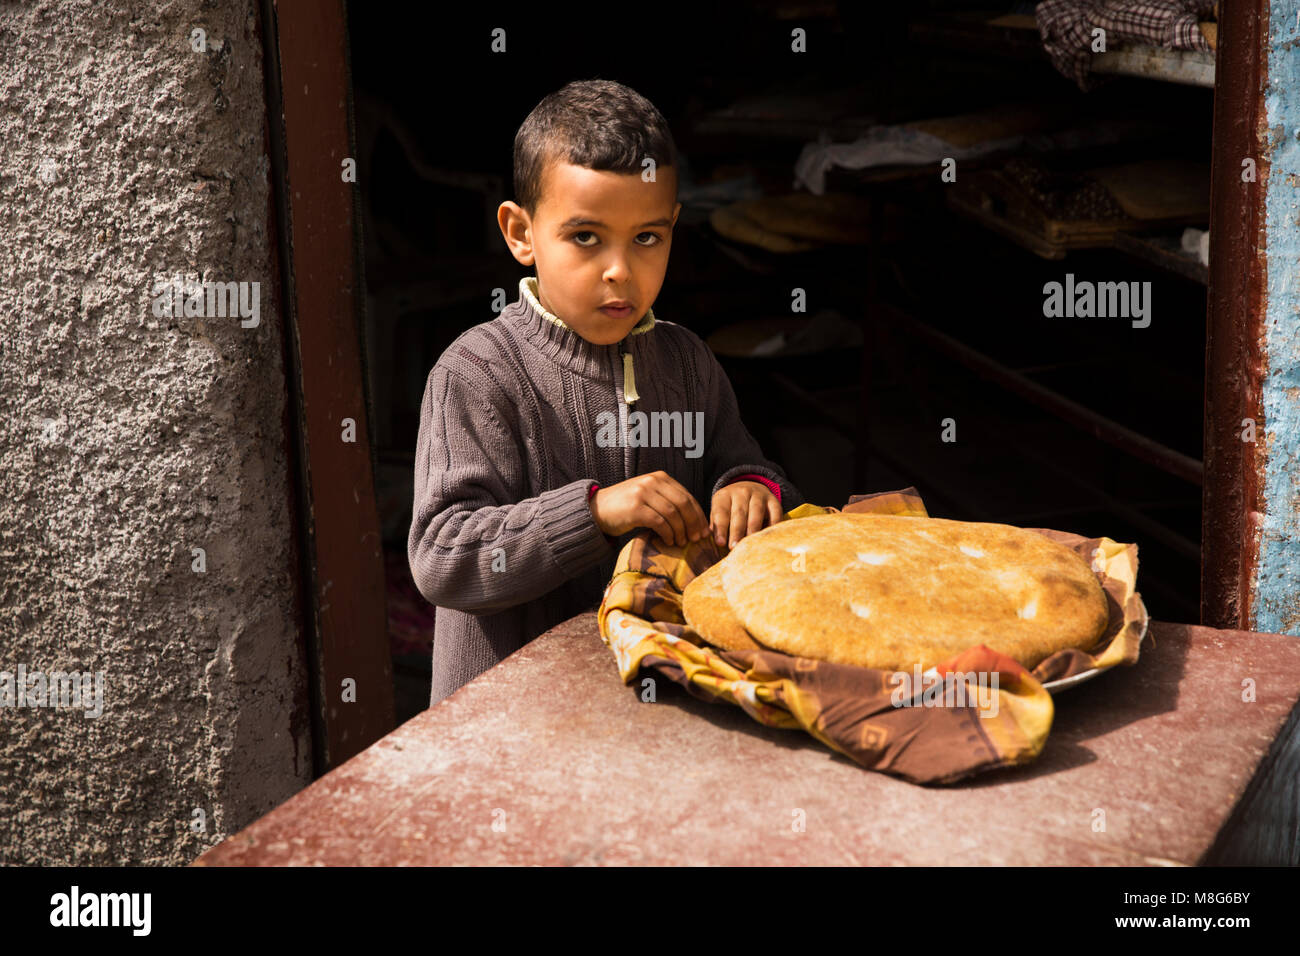 Morocco, Casablanca, Medina, Rue Tnaker, boy eating freshly baked loaf of bread Stock Photo